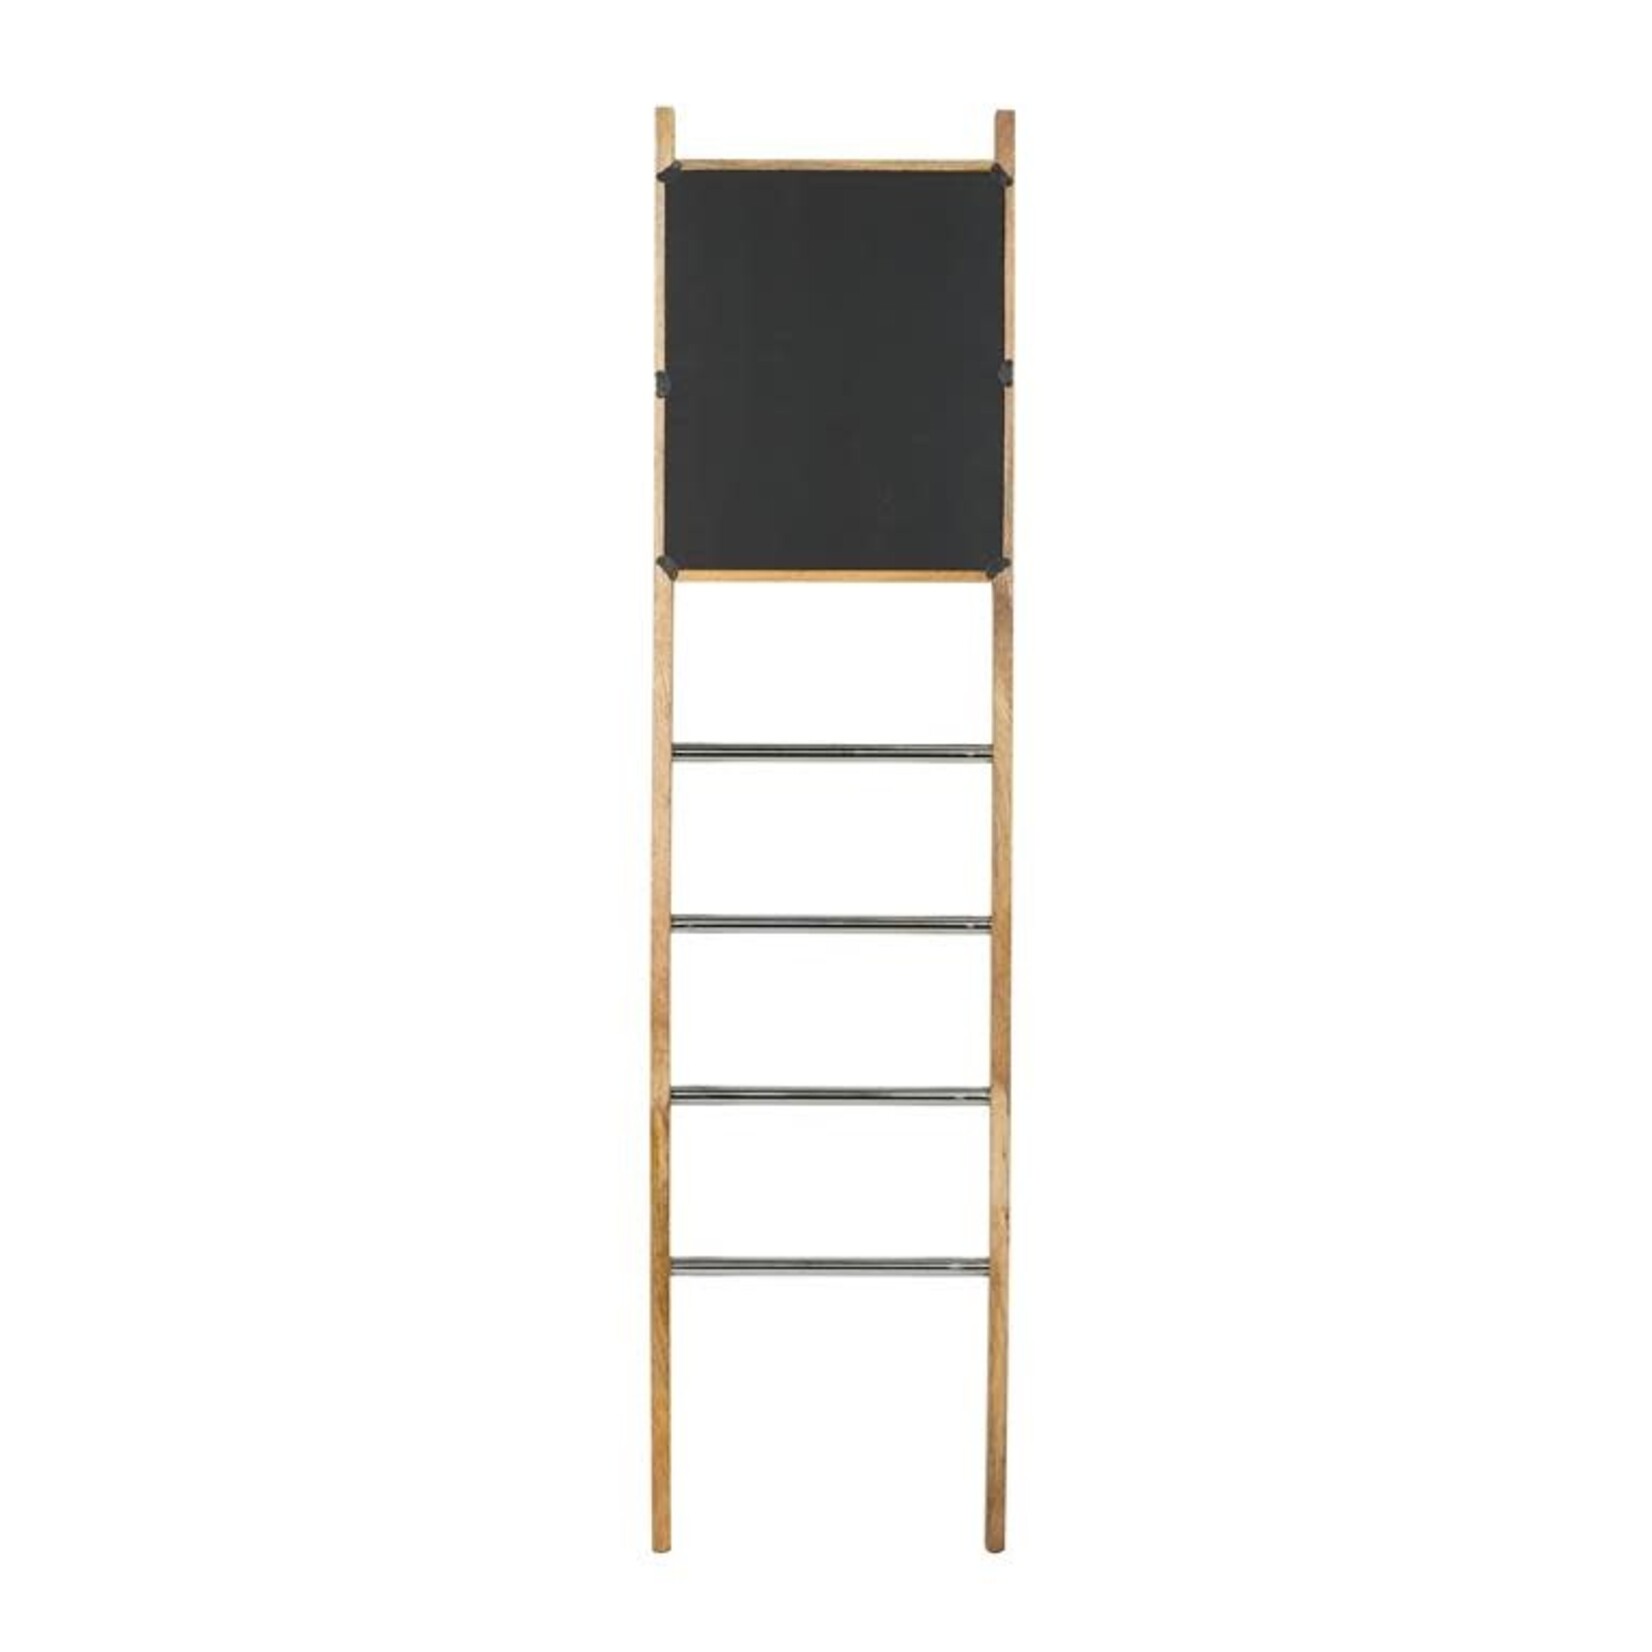 Uma Mirror Ladder 18"Wx72"H